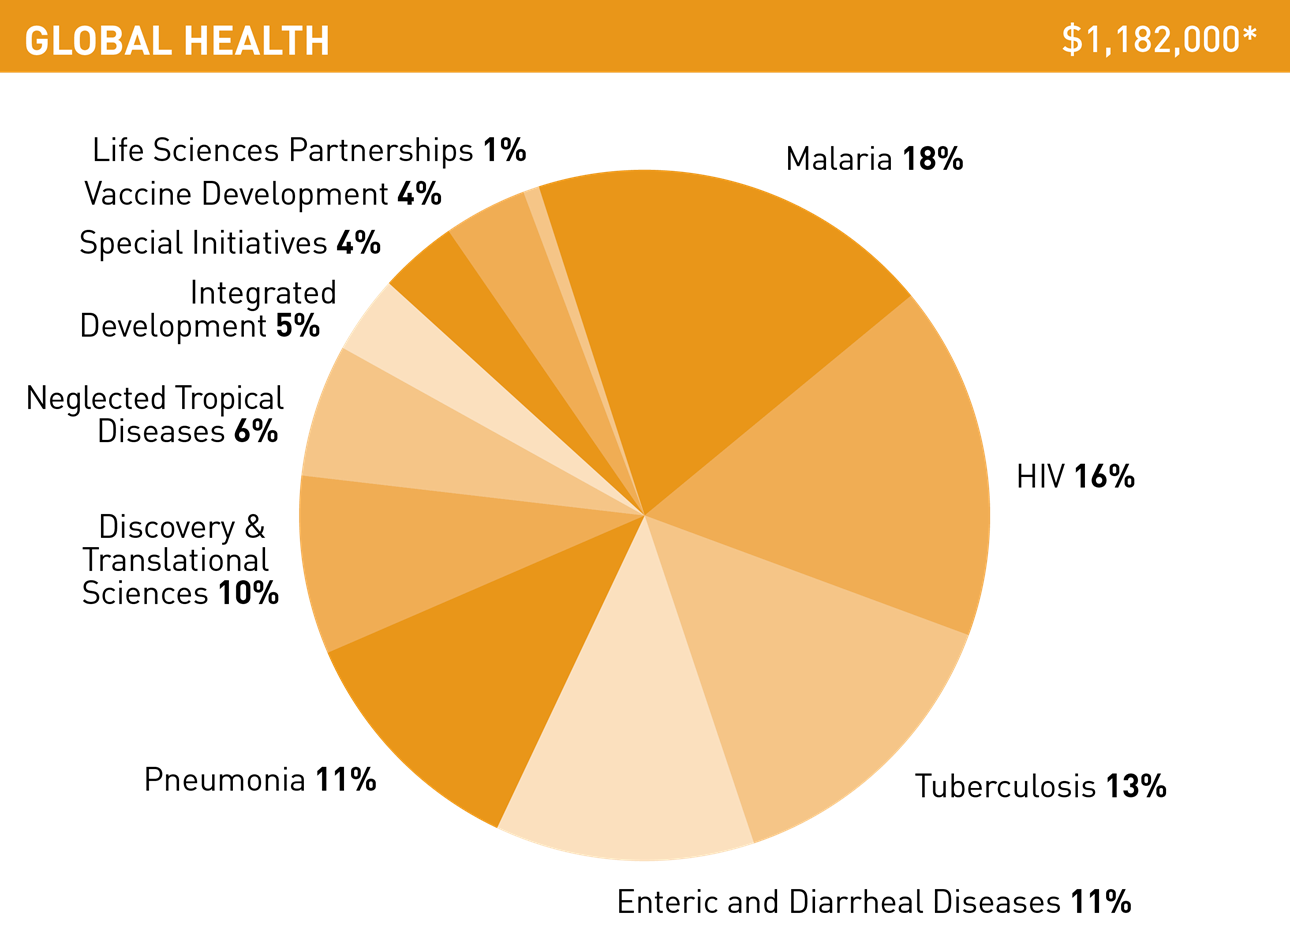 Gates Foundation Annual Report 2015 Global Health